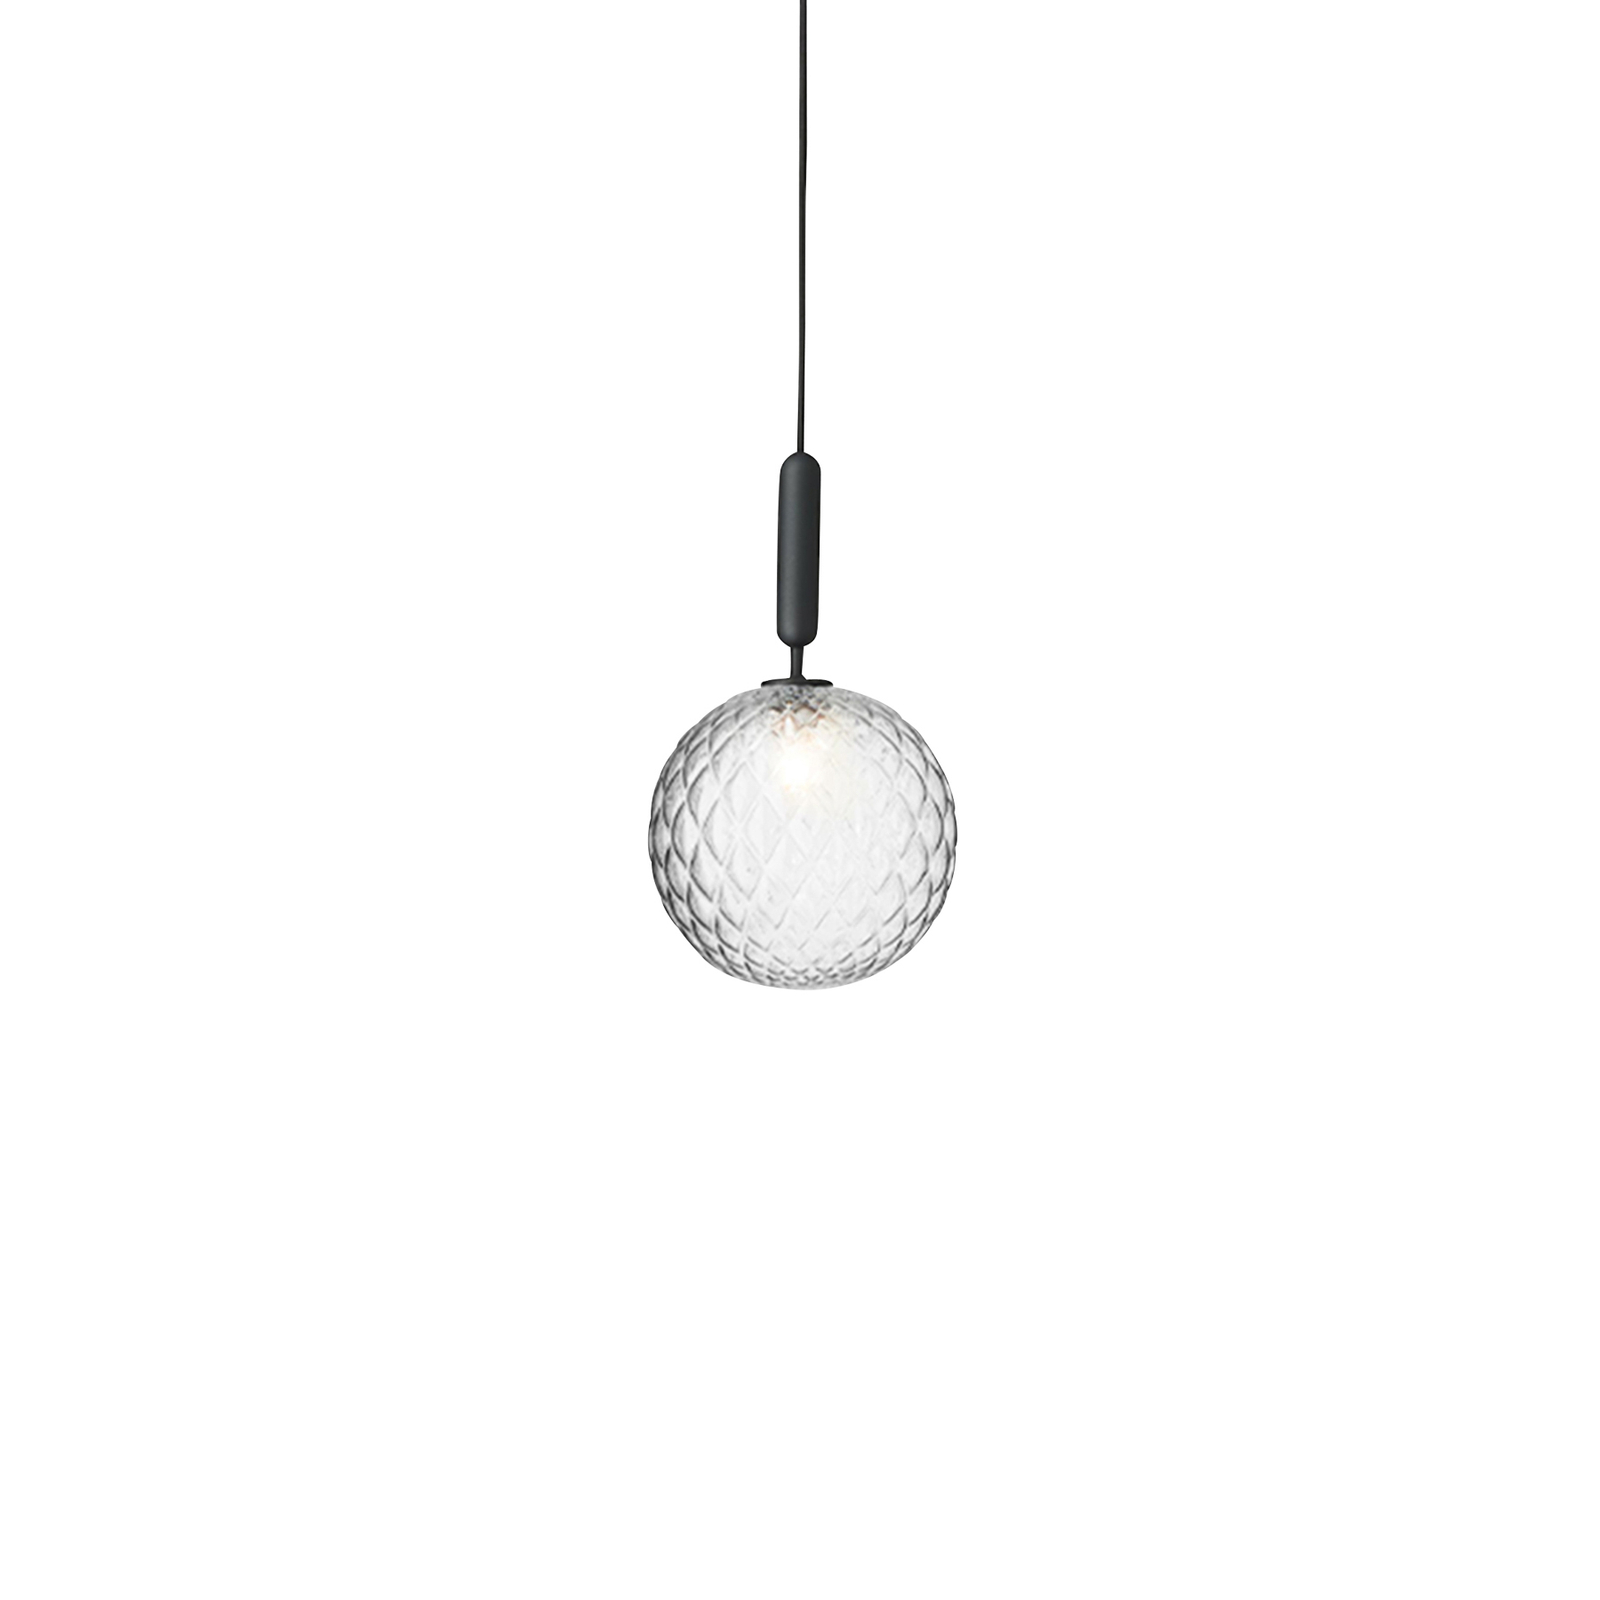 Nuura Miira 1 Large hanging lamp 1-bulb grey/clear